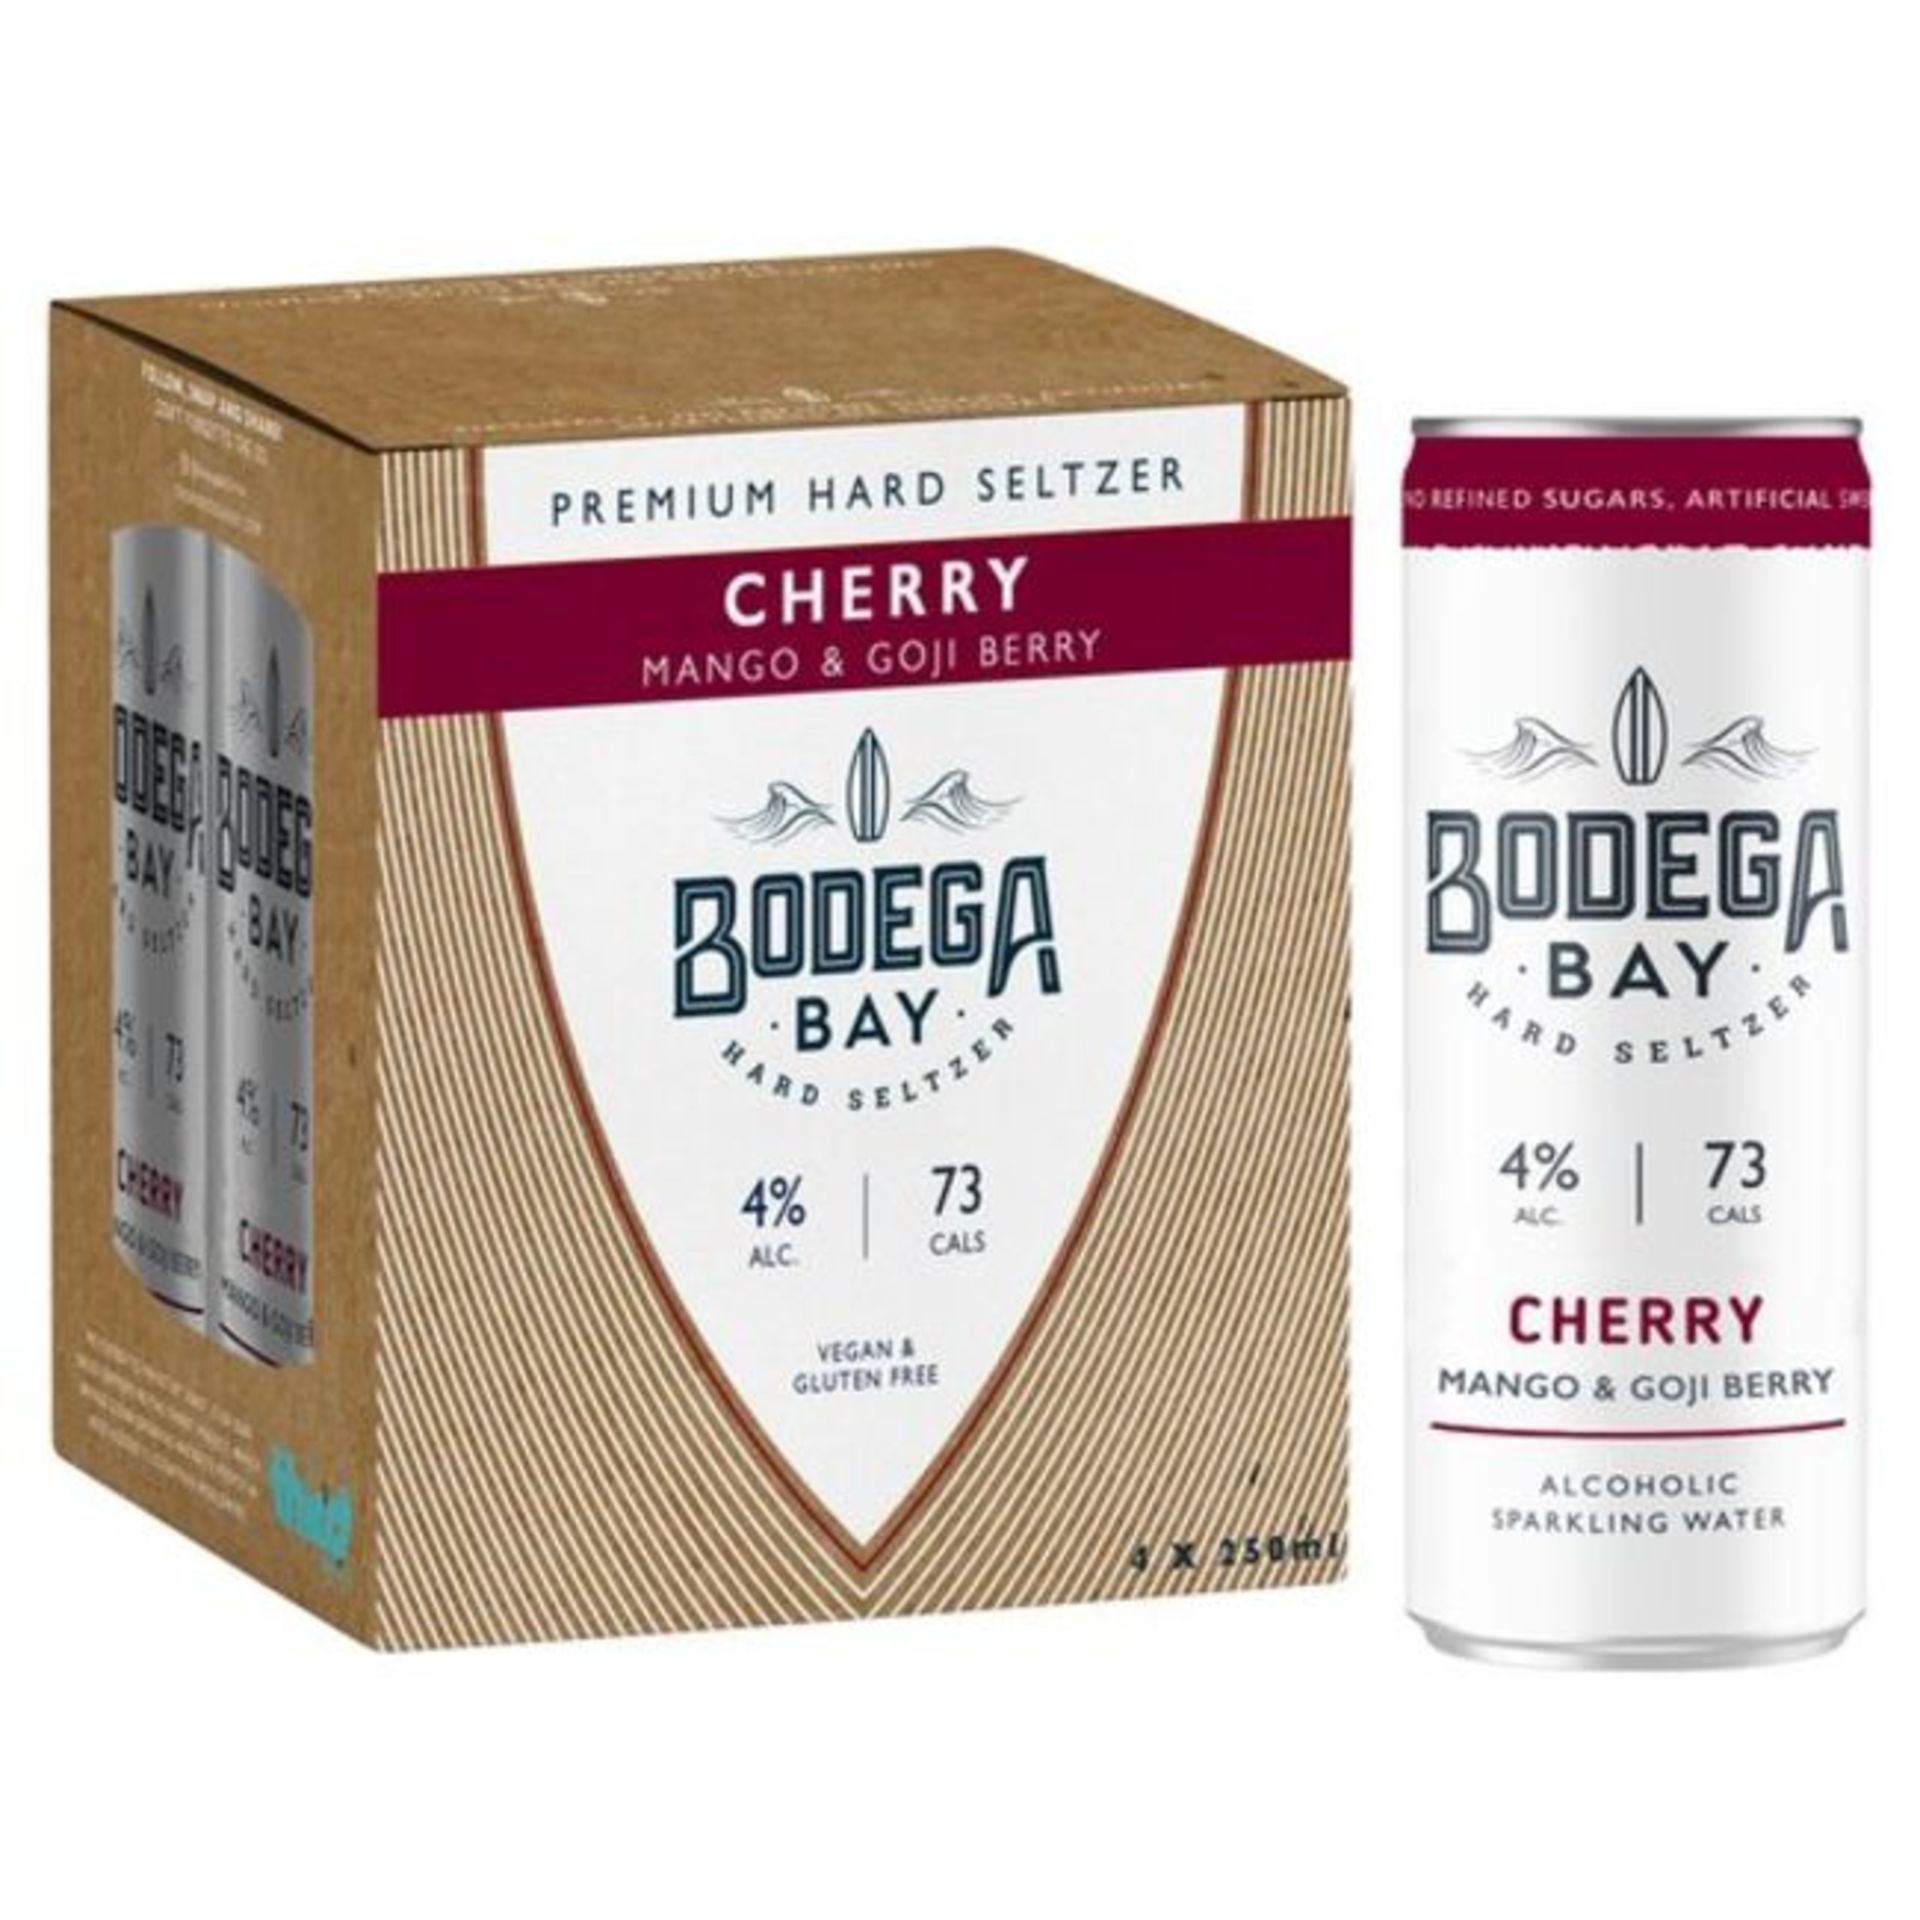 24 x Bodega Bay Hard Seltzer 250ml Alcoholic Sparkling Water Drinks - Cherry Mango & Goji Berry - Image 6 of 7